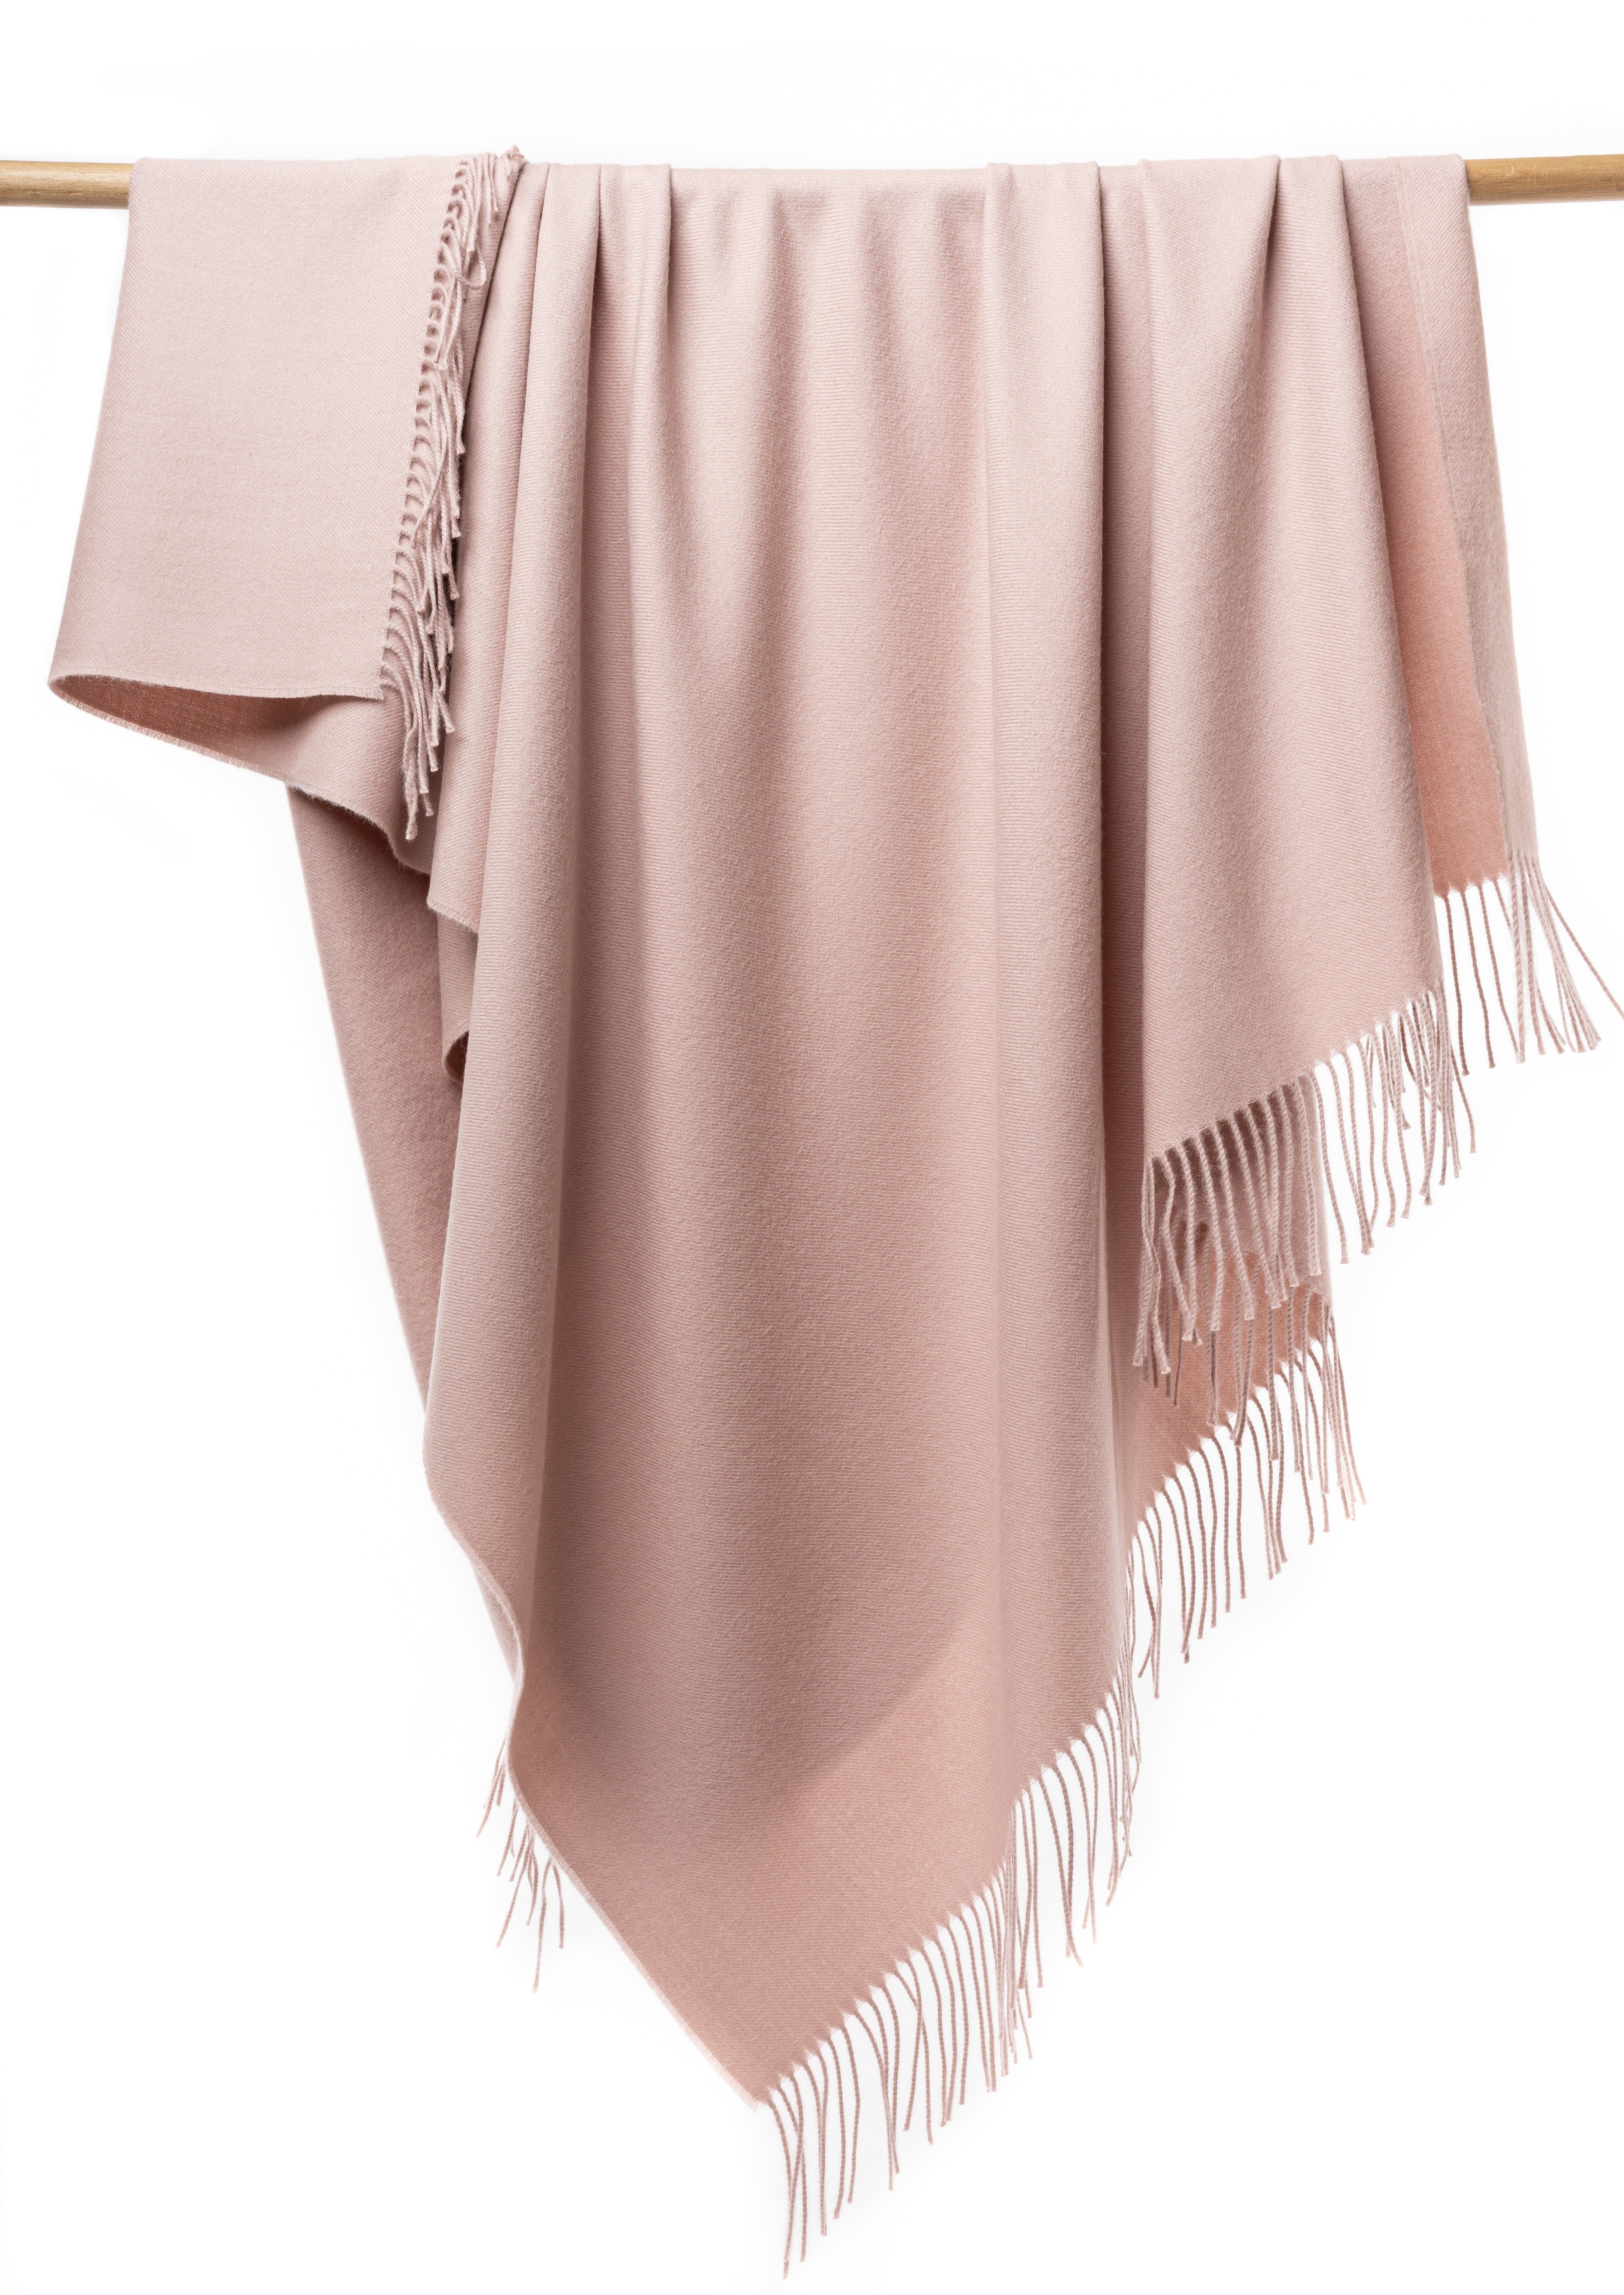 Alpaca Blanket - Plain (Pink)